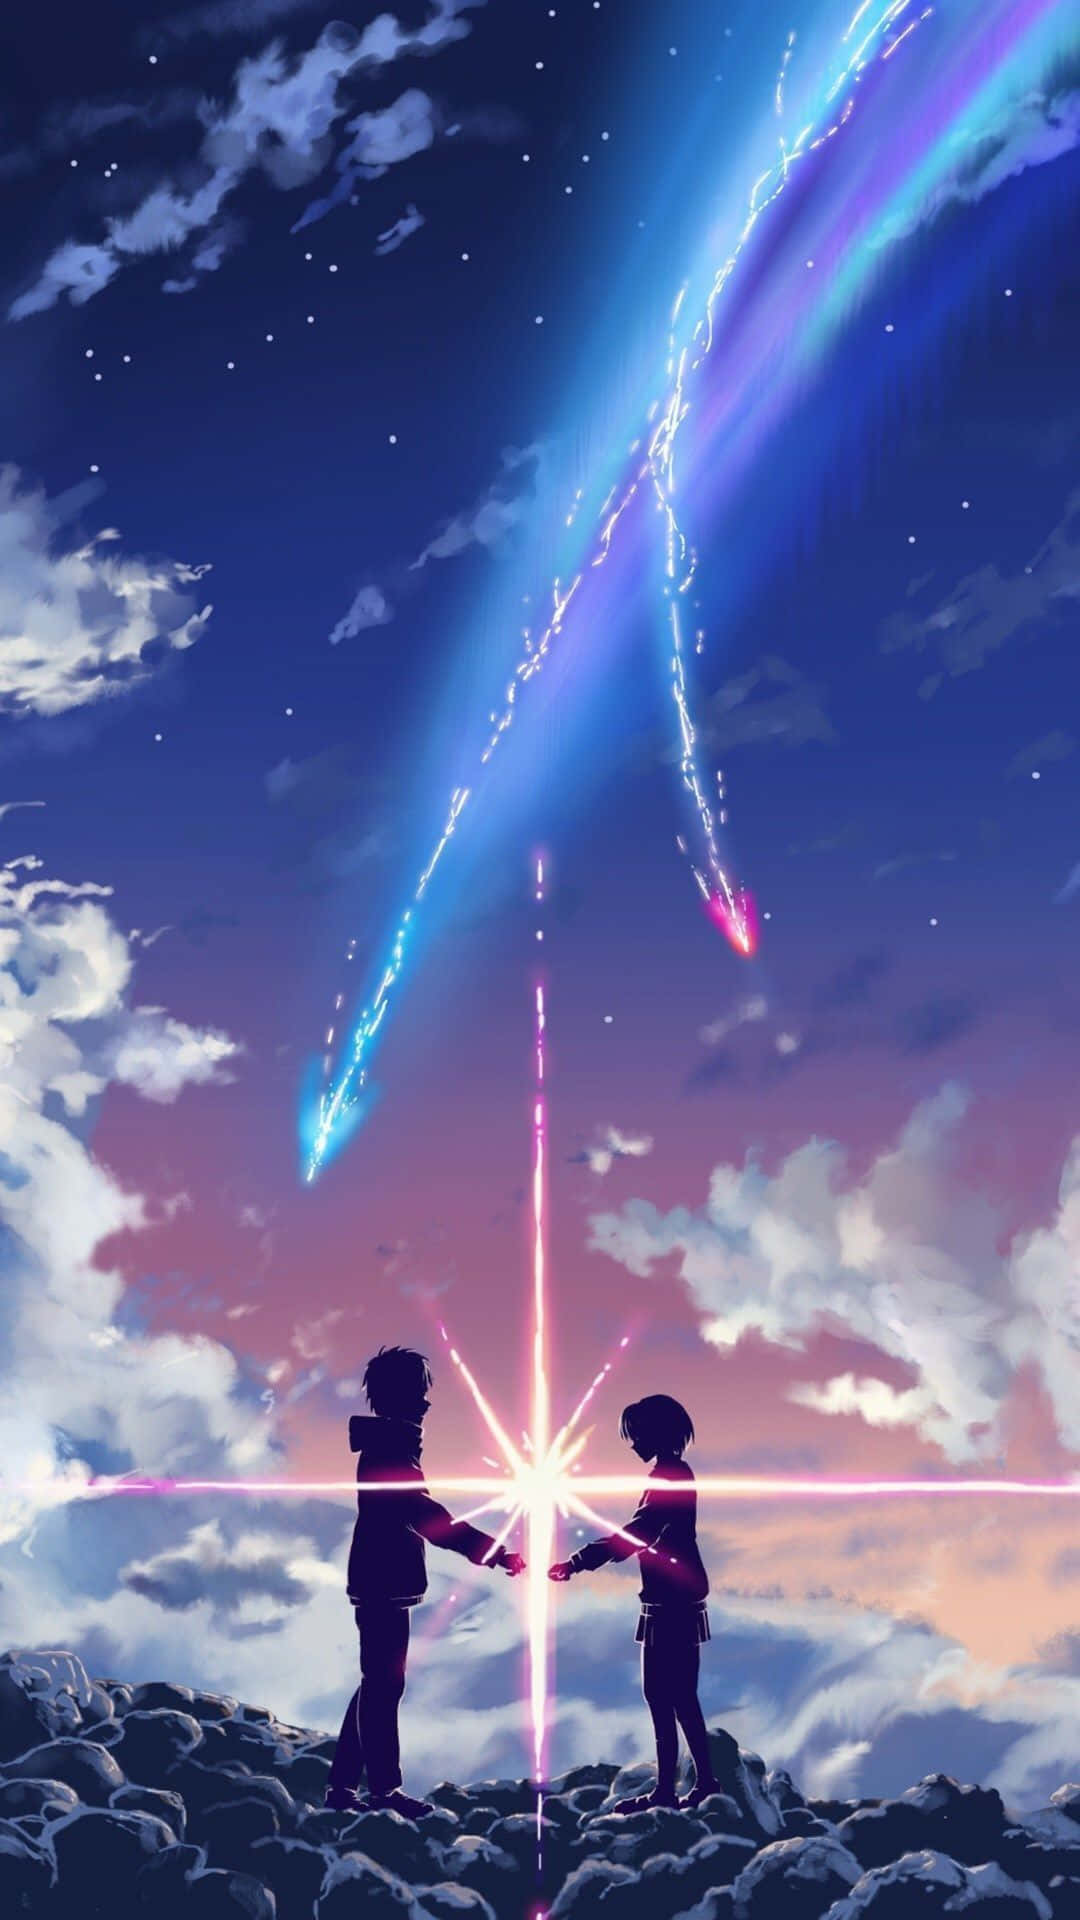 Best Anime Kimi No Nawa Mitsuha And Taki Background